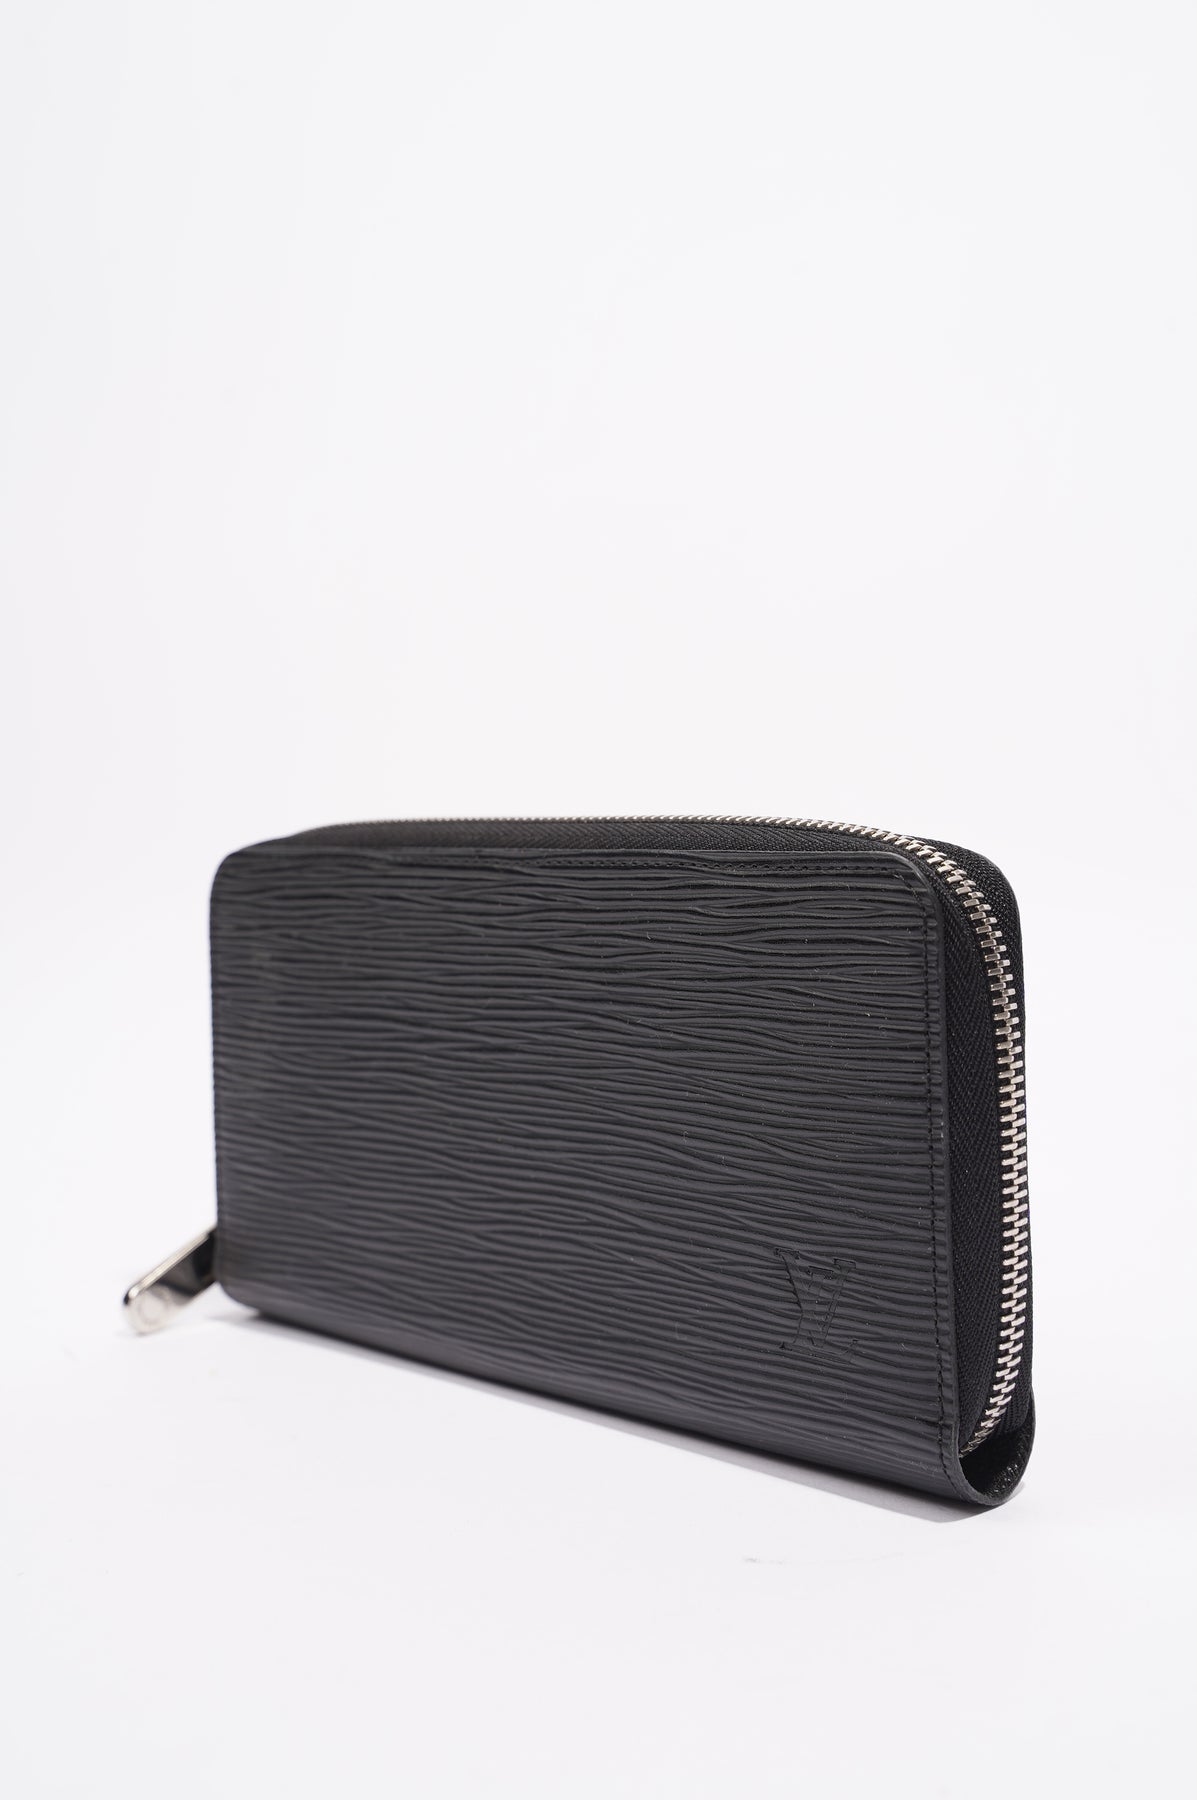 Louis Vuitton® Christopher Wearable Wallet Monogram. Size